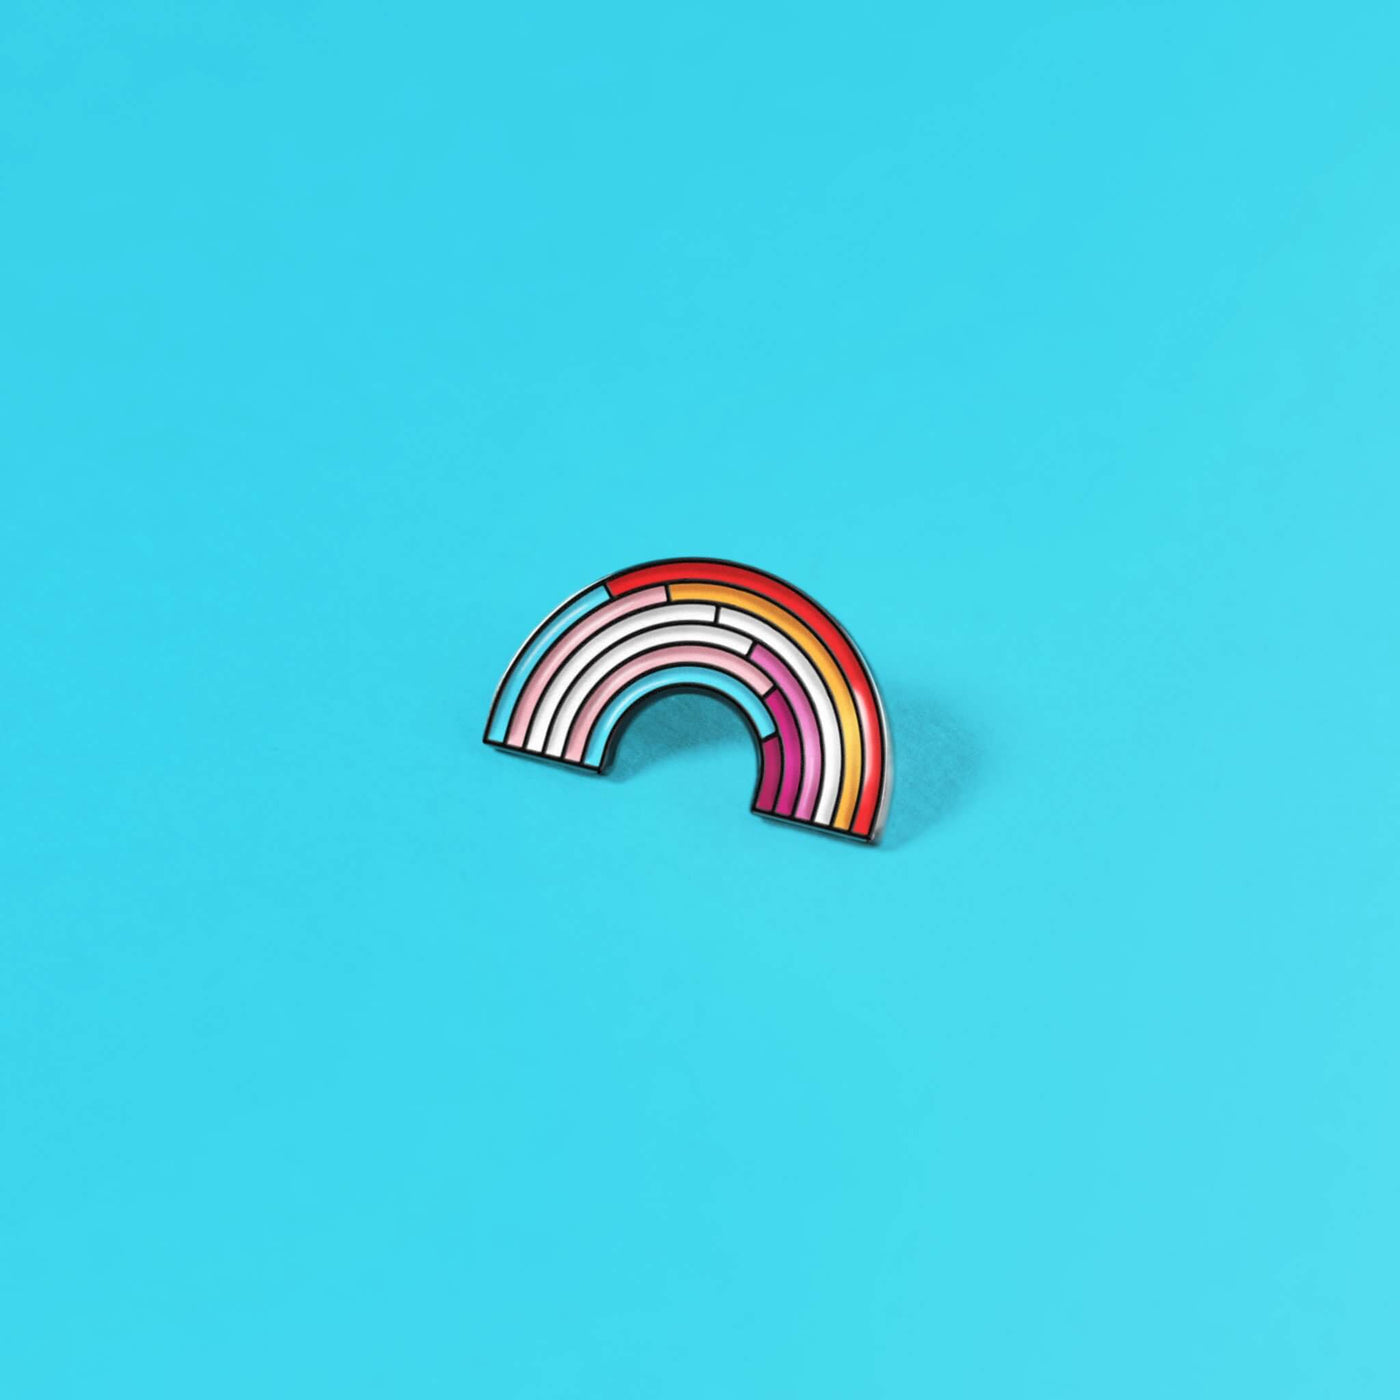 The Pin Prick - The Trans/Rainbow Enamel Pin